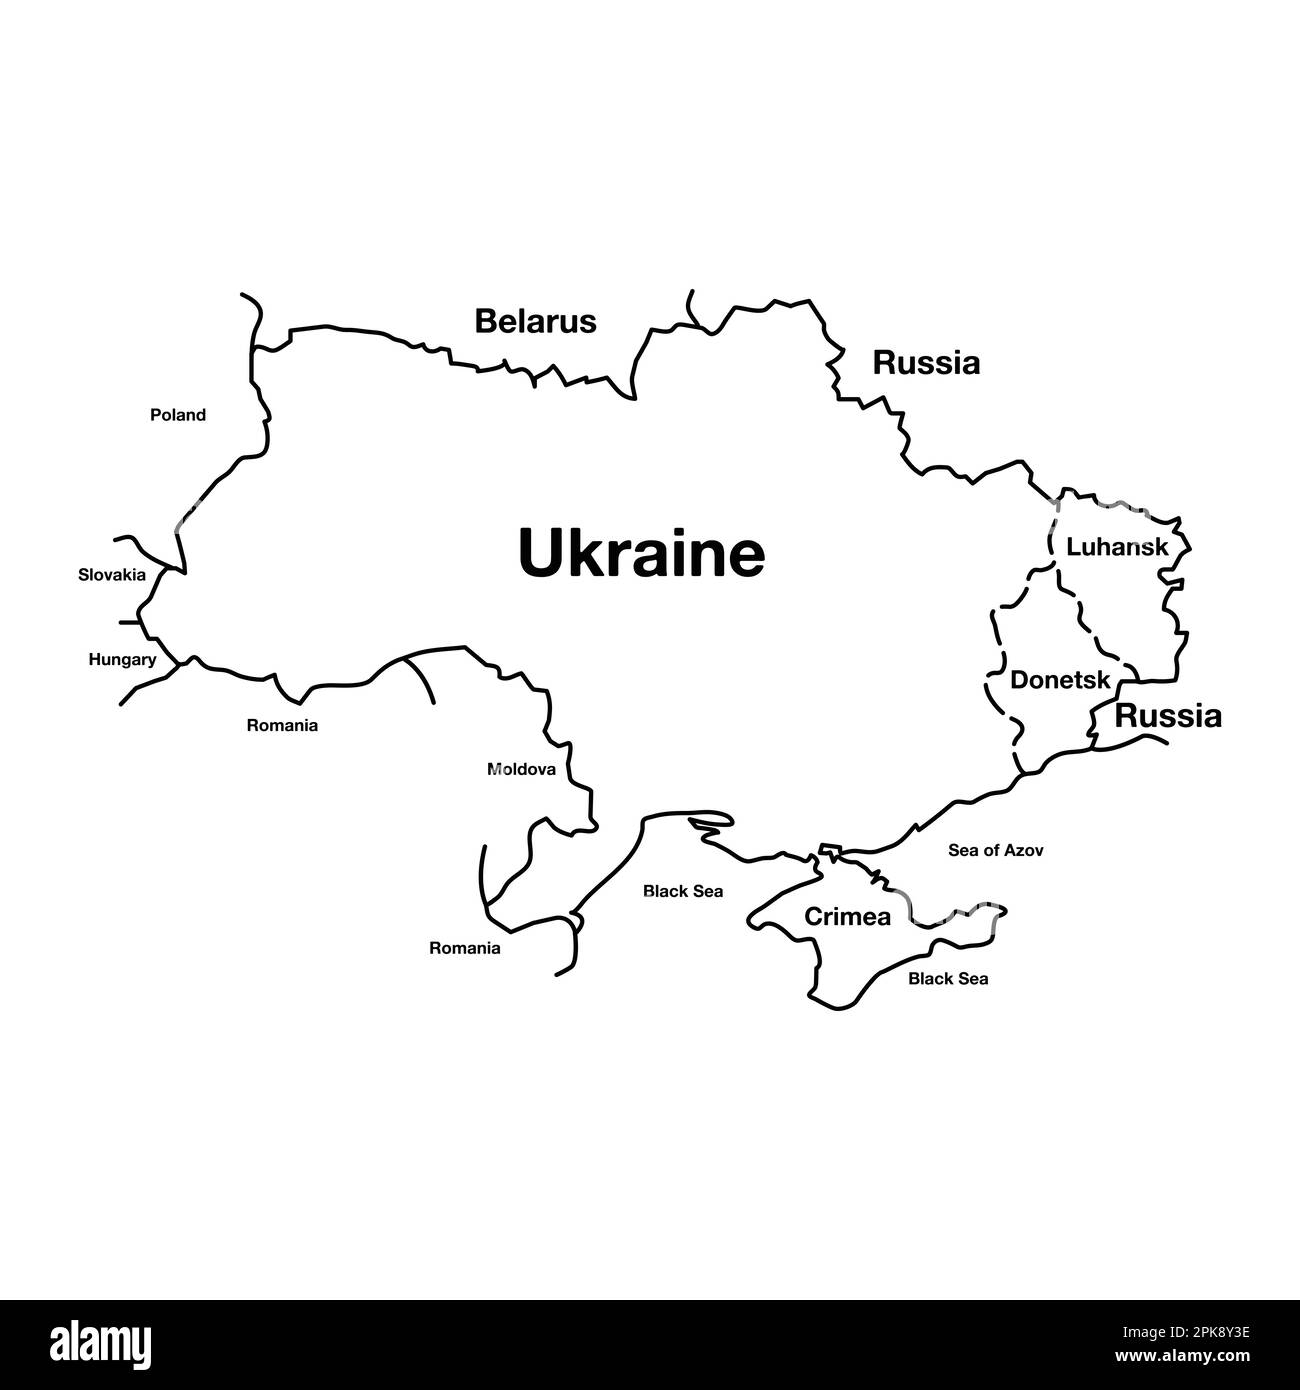 Russia vs Ukraine Conflict Outline Map. Editable Vector EPS Symbol Illustration. Stock Vector